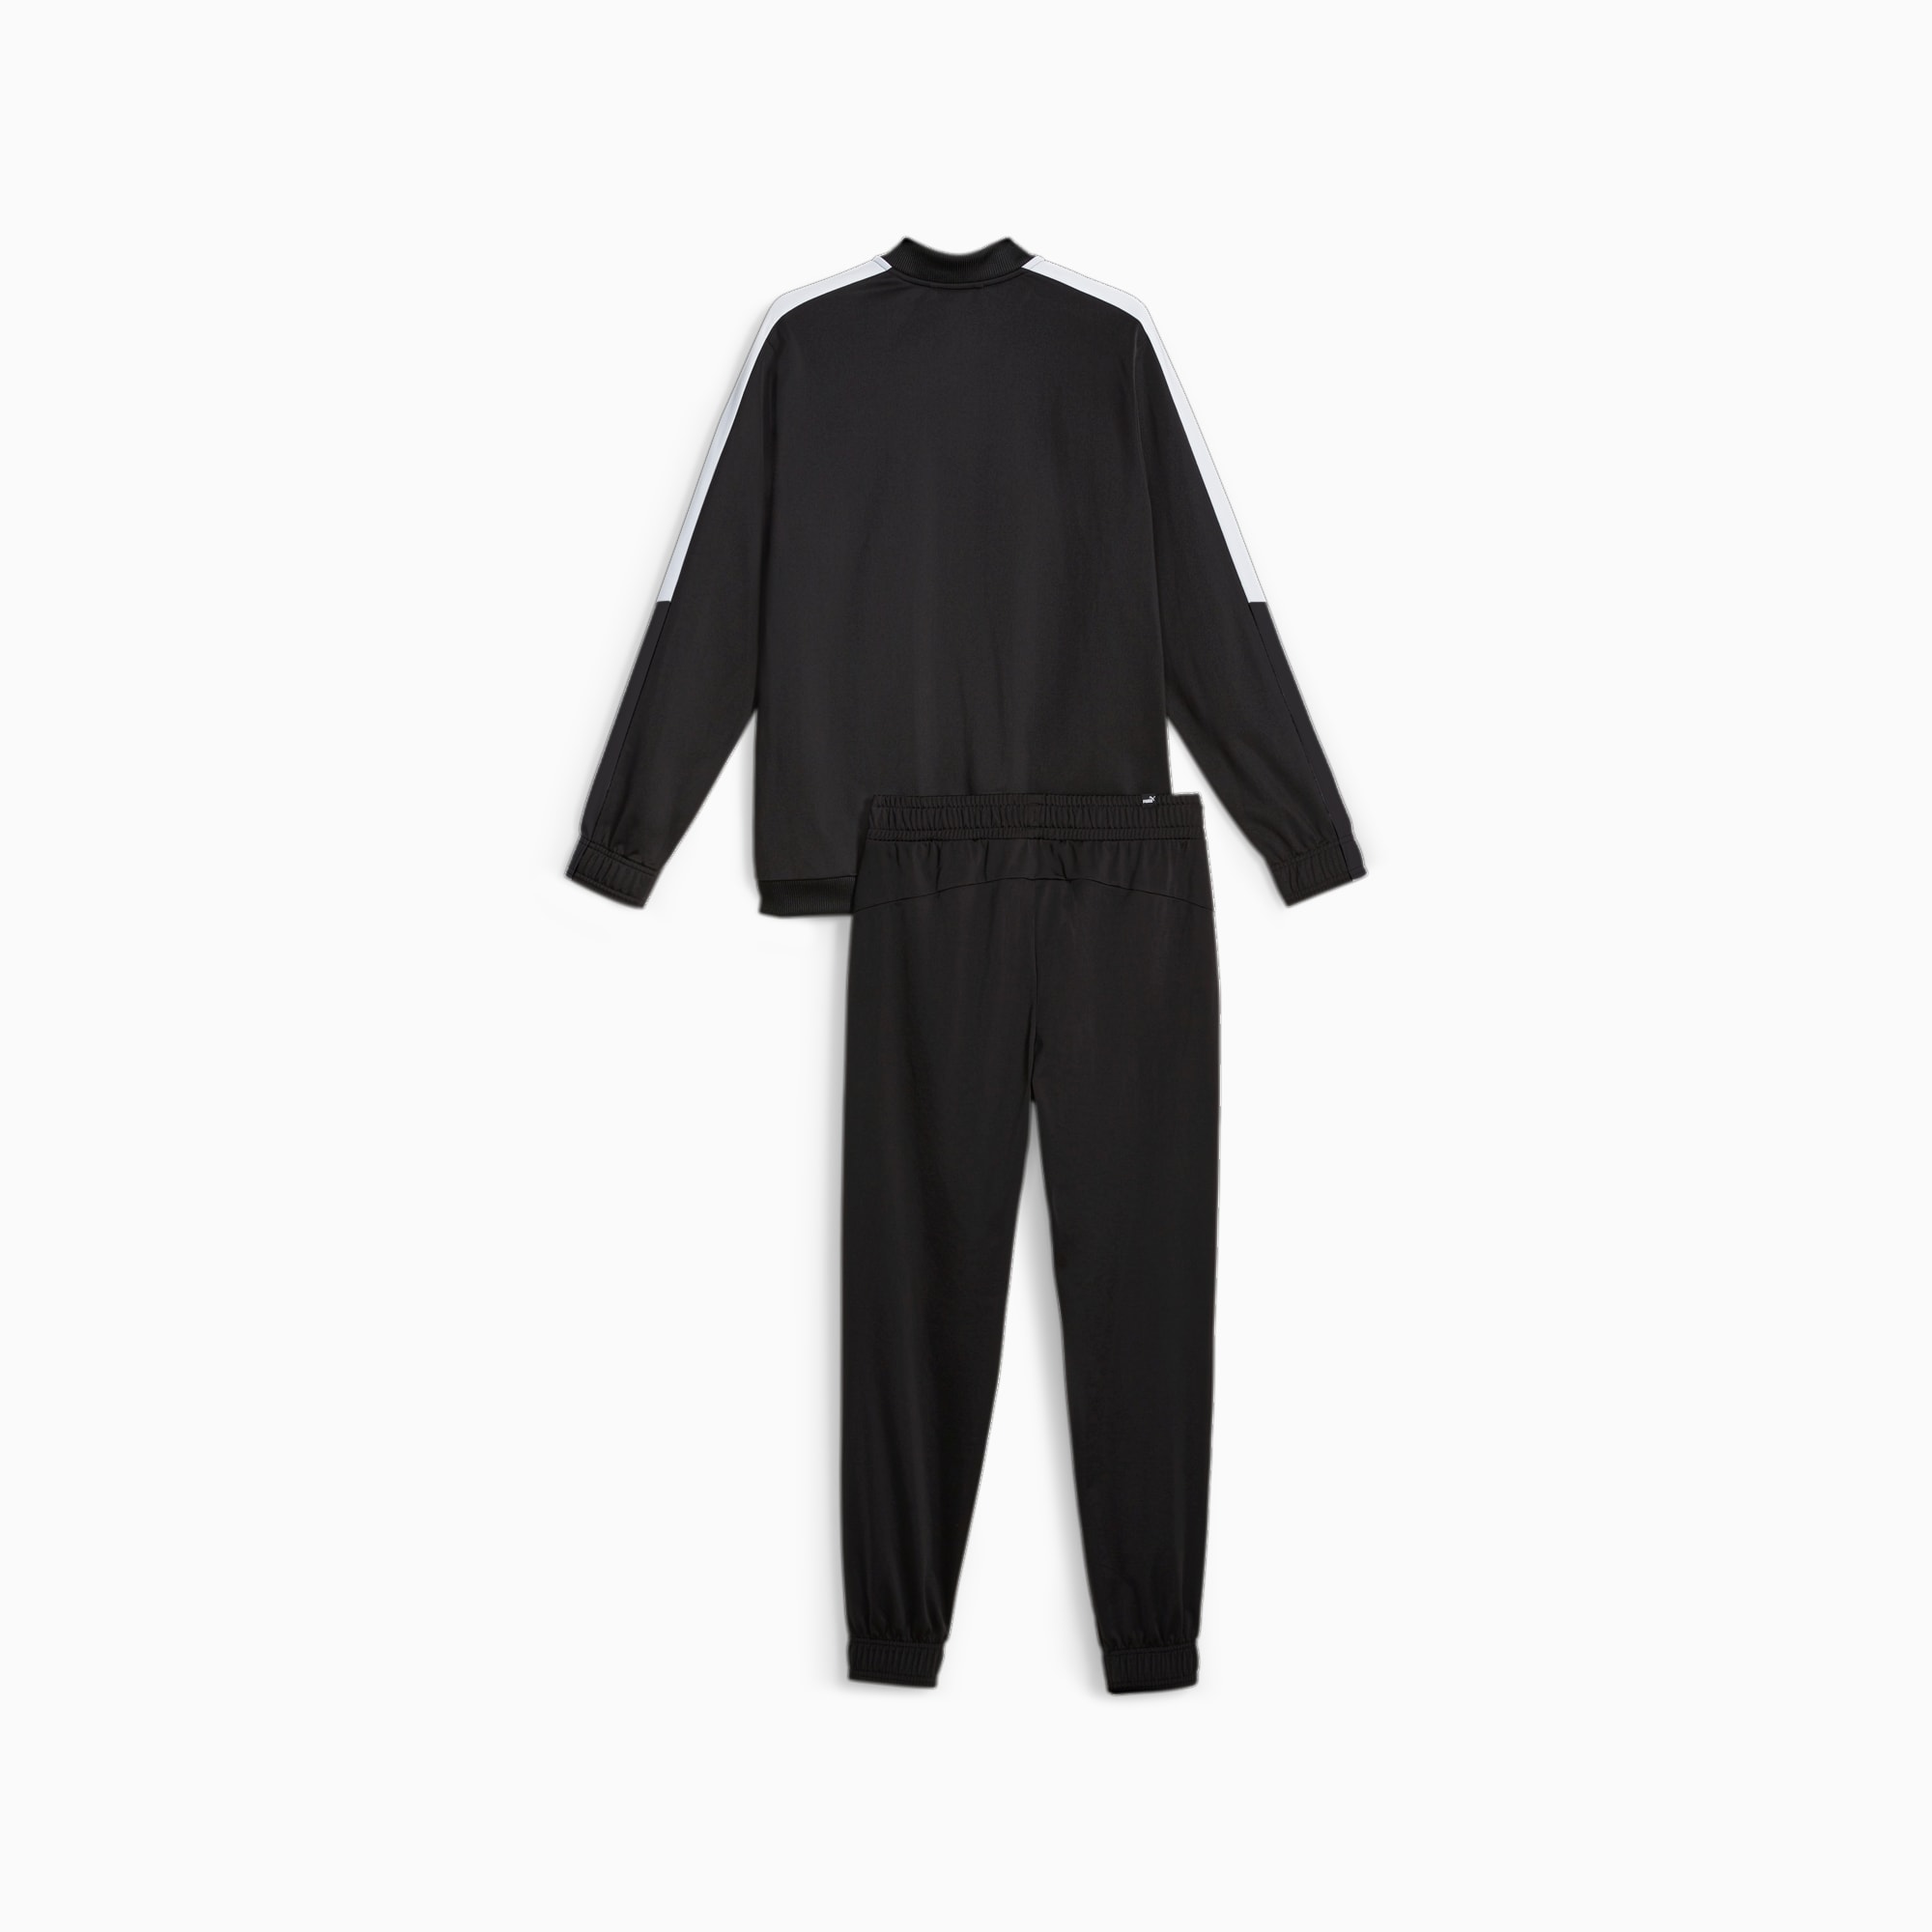 PUMA Men's Baseball Tricot Suit, Black, Size XXL